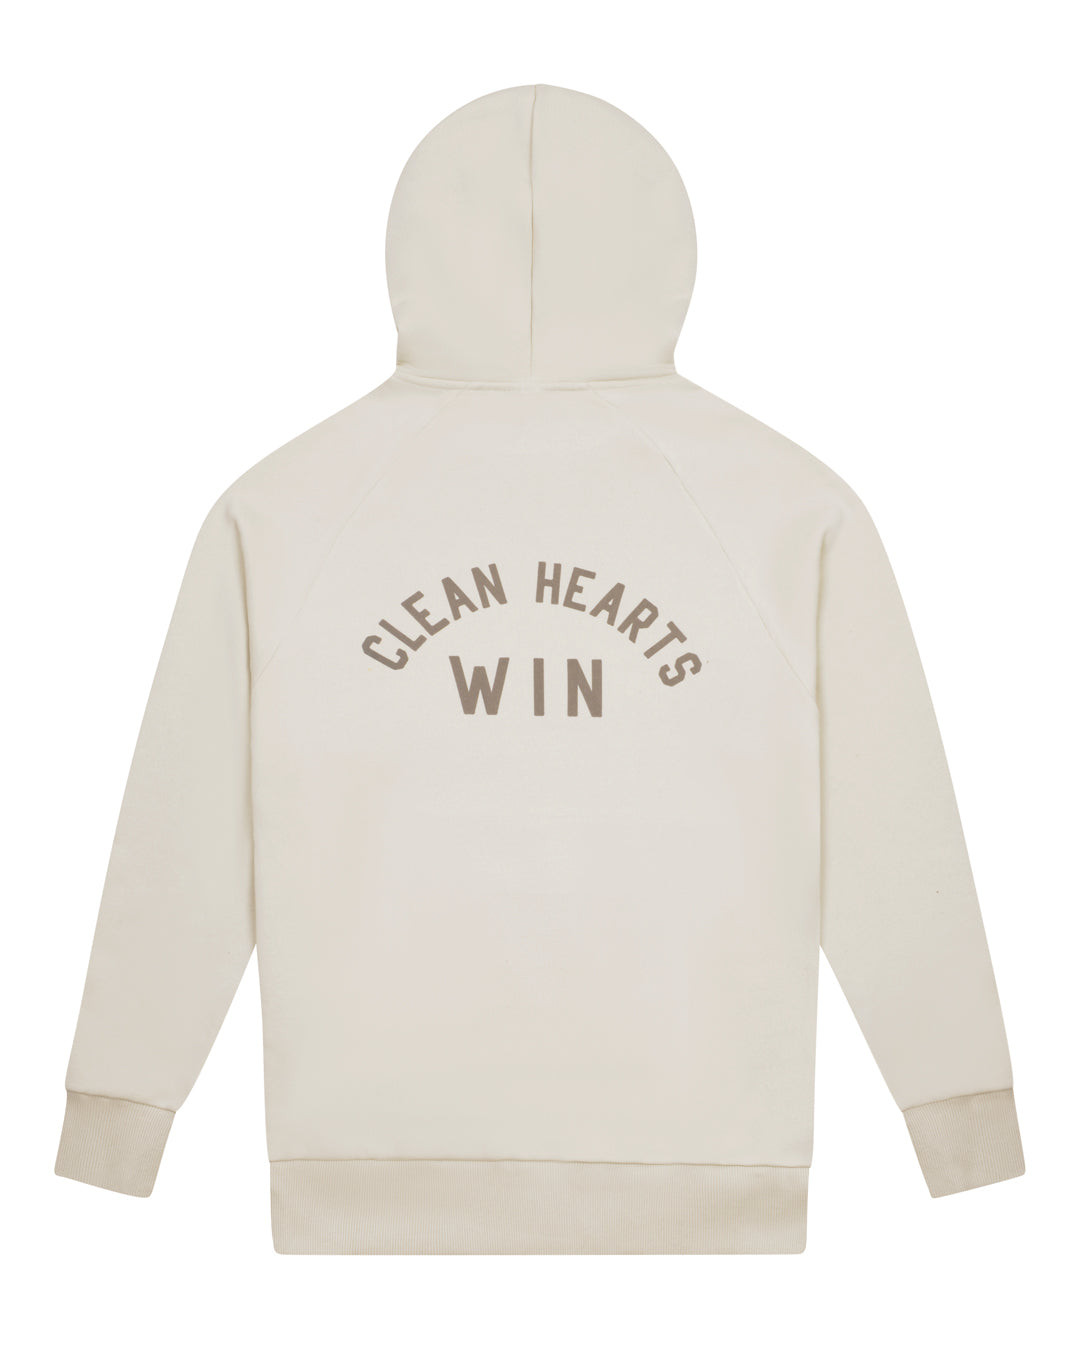 Silver Birch 'Clean Hearts Win' Hoodie